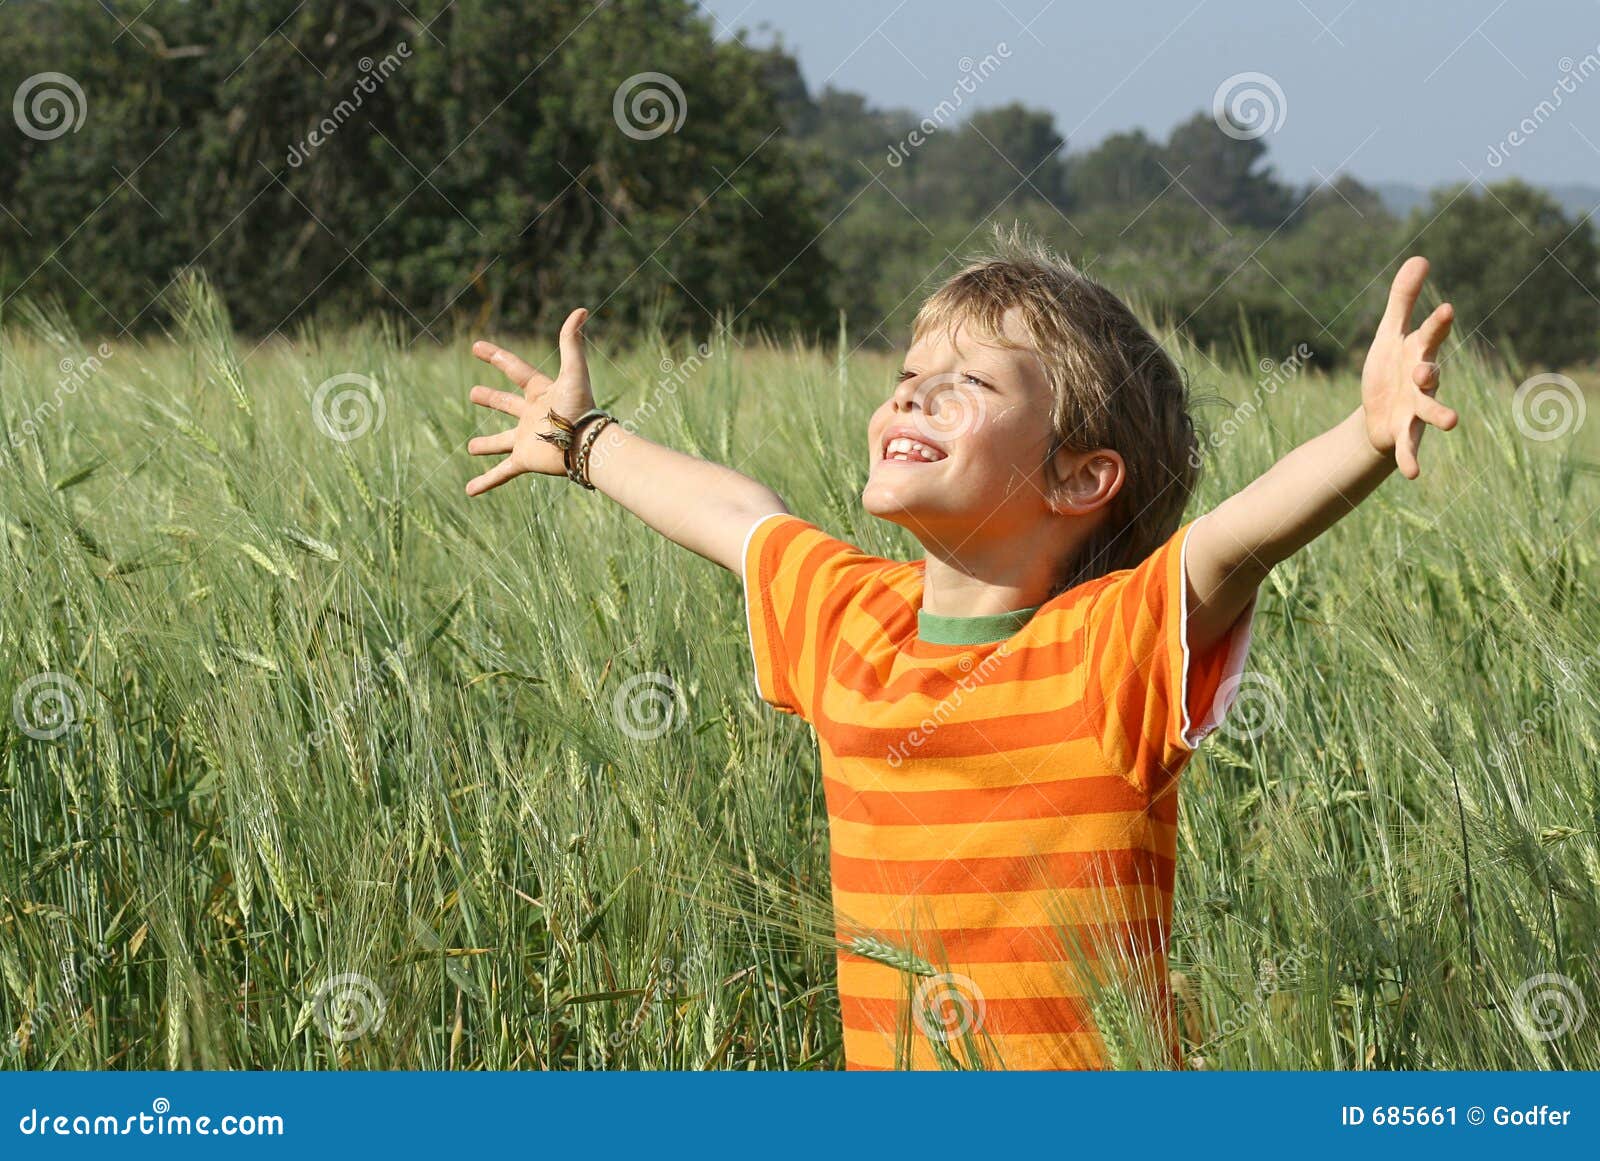 child faith joy happiness